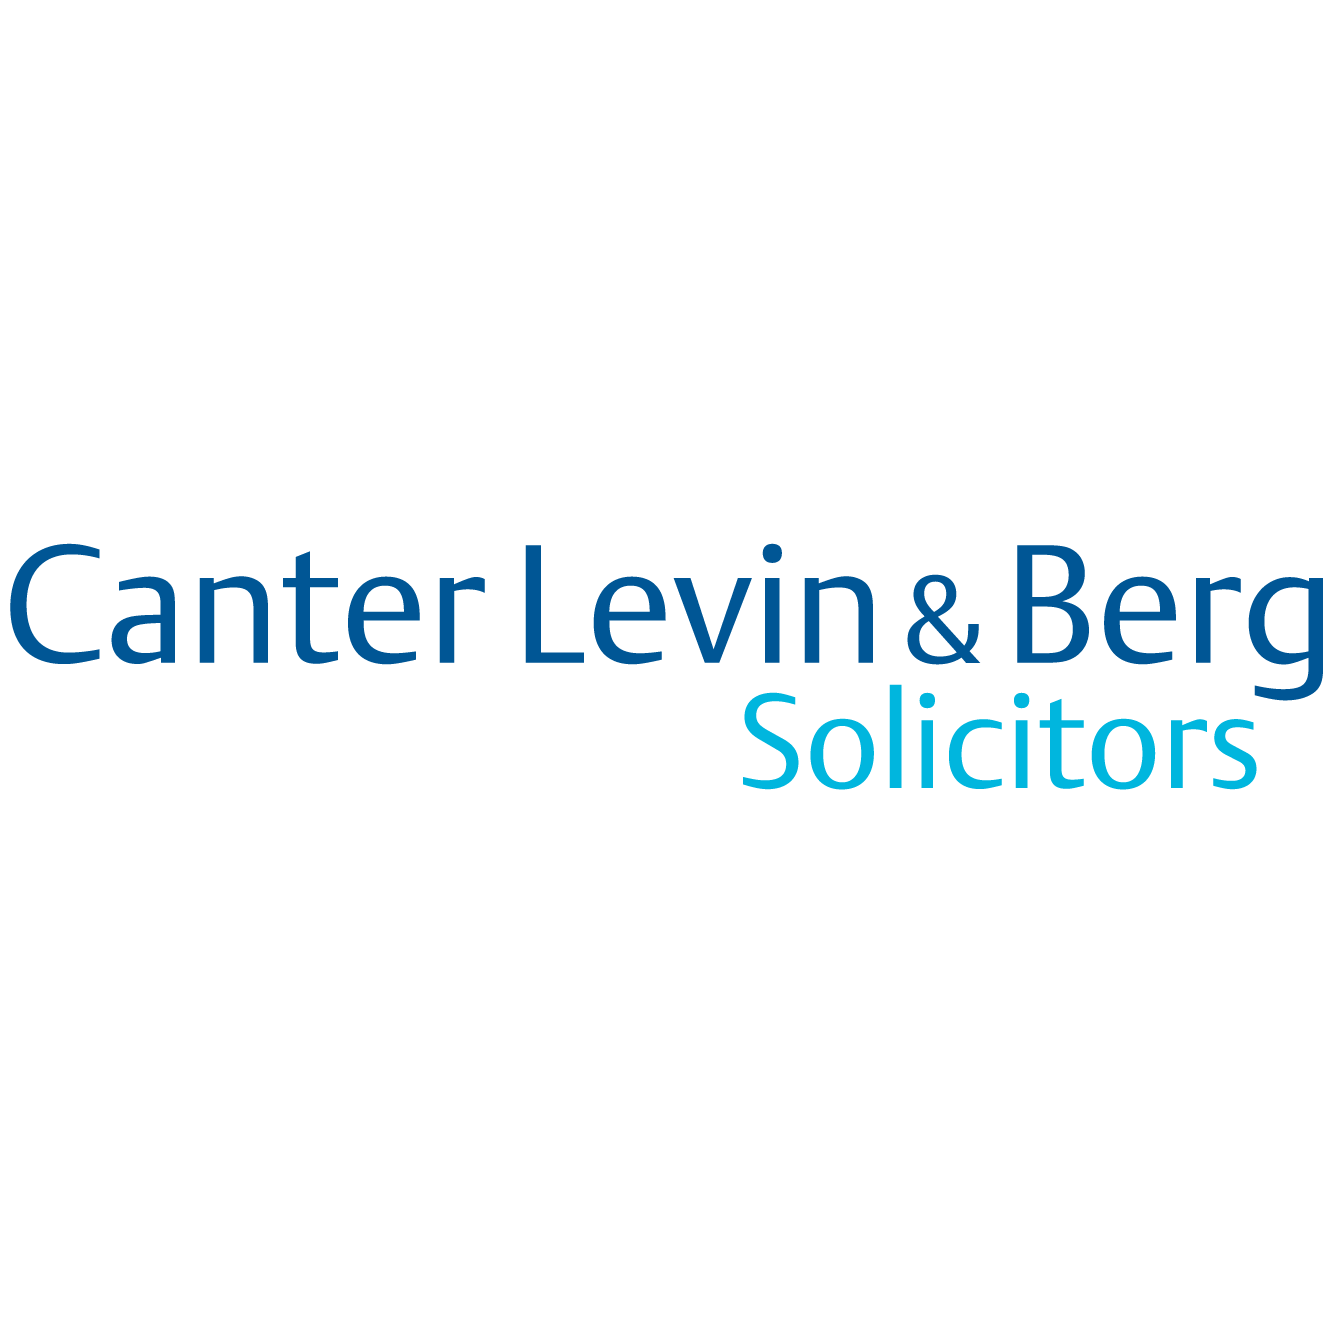 Canter Levin & Berg Solicitors Logo